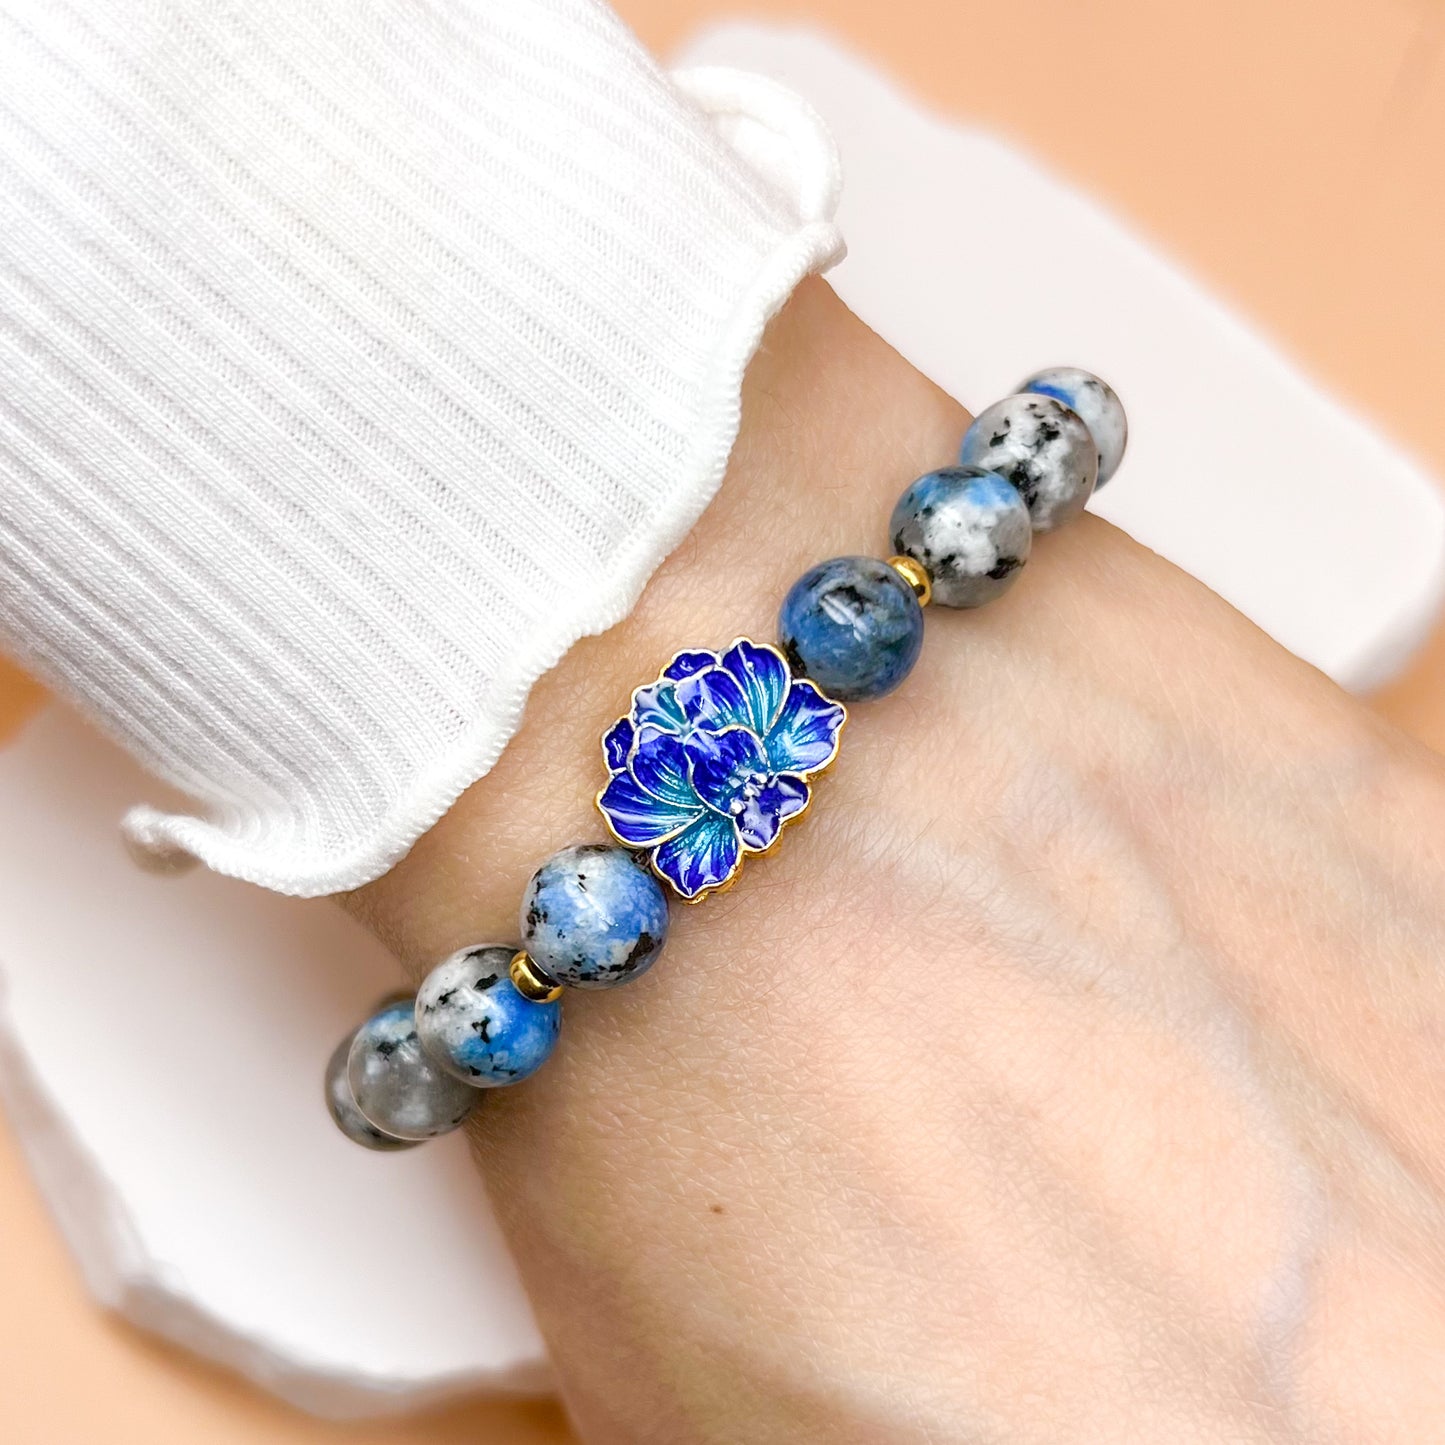 K2 Gemstone and blue cloisonné bracelet